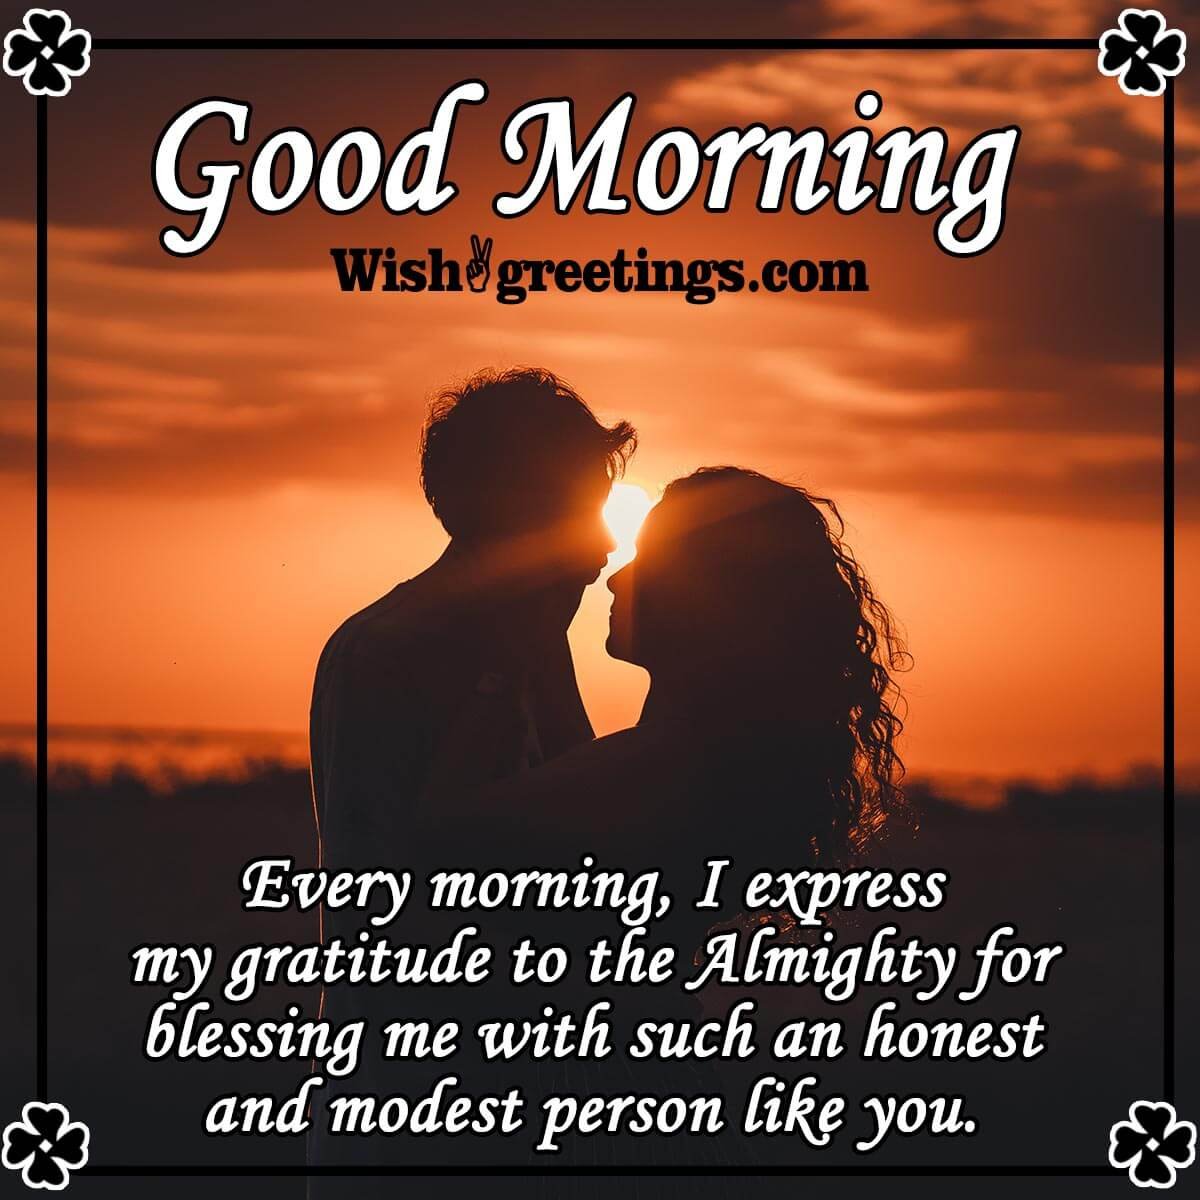 Every Morning, I Express My Gratitude